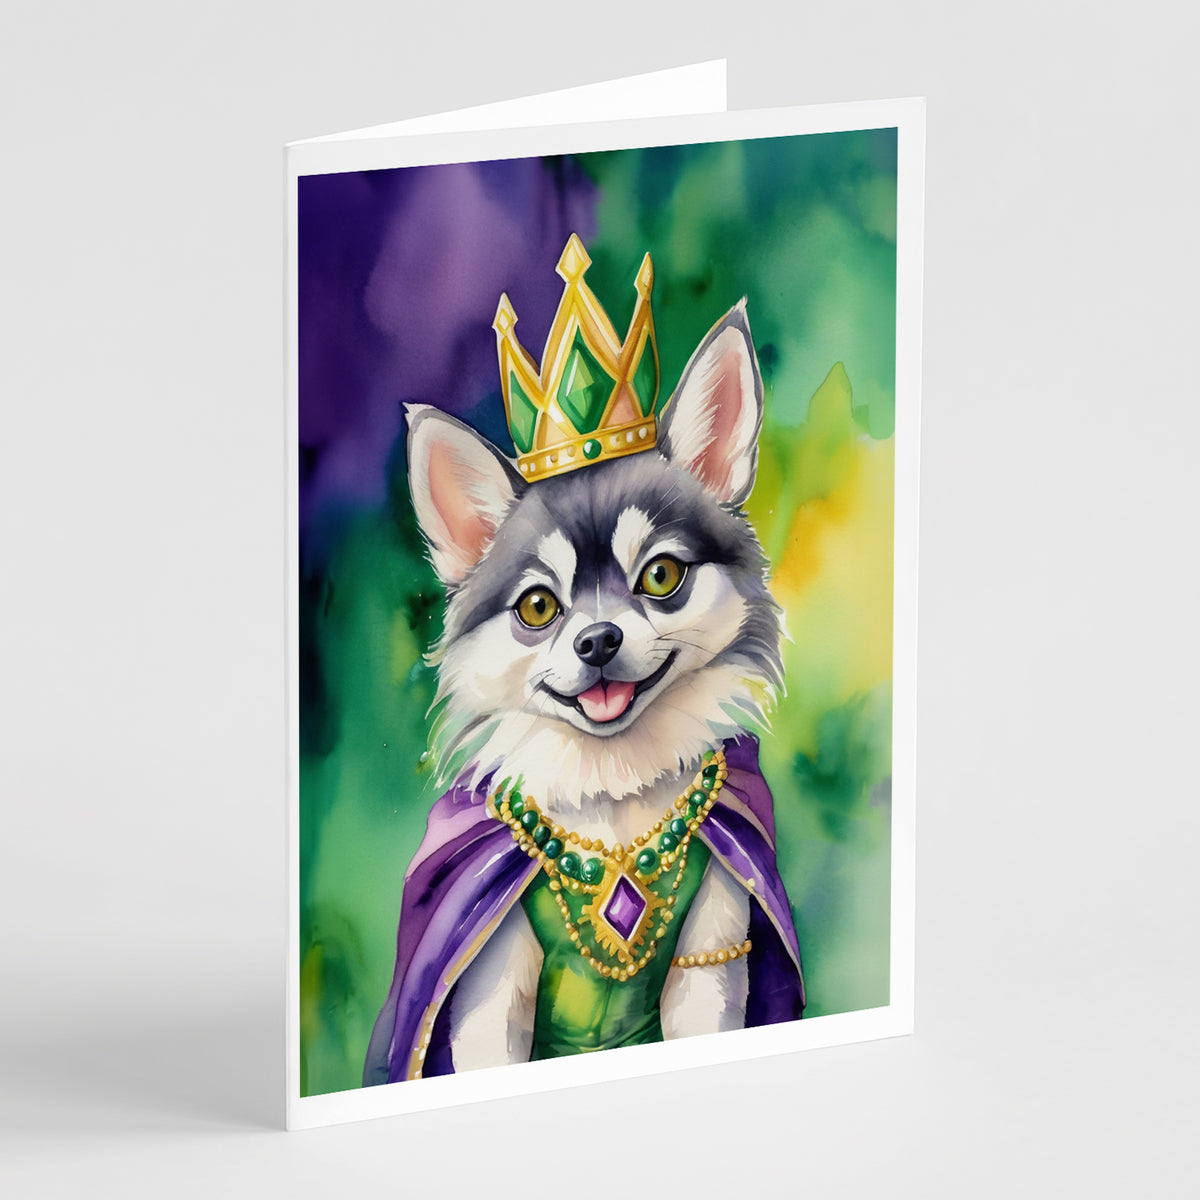 Buy this Alaskan Klee Kai King of Mardi Gras Greeting Cards Pack of 8